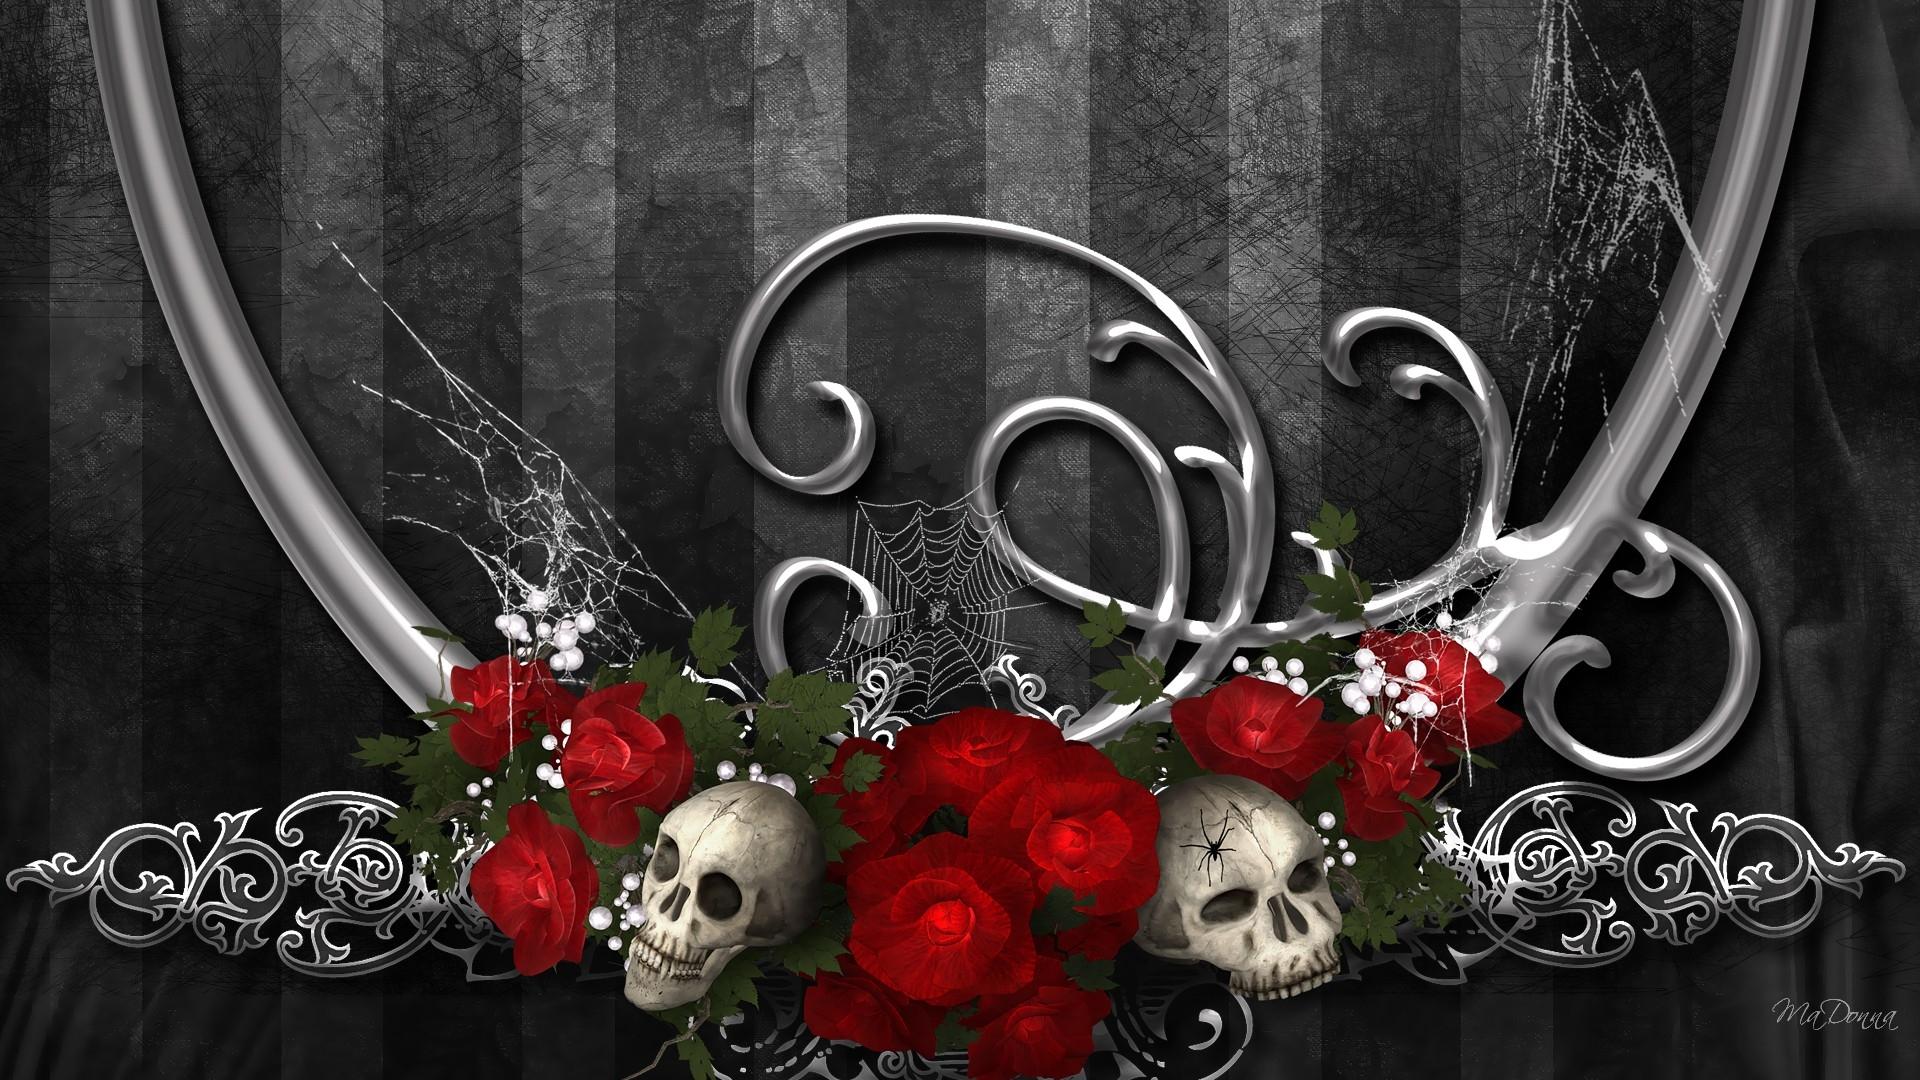 KREA  a badass guns and roses digital art wallpaper on a black background  crimson highlights skull and crossbones red roses intricate illustration